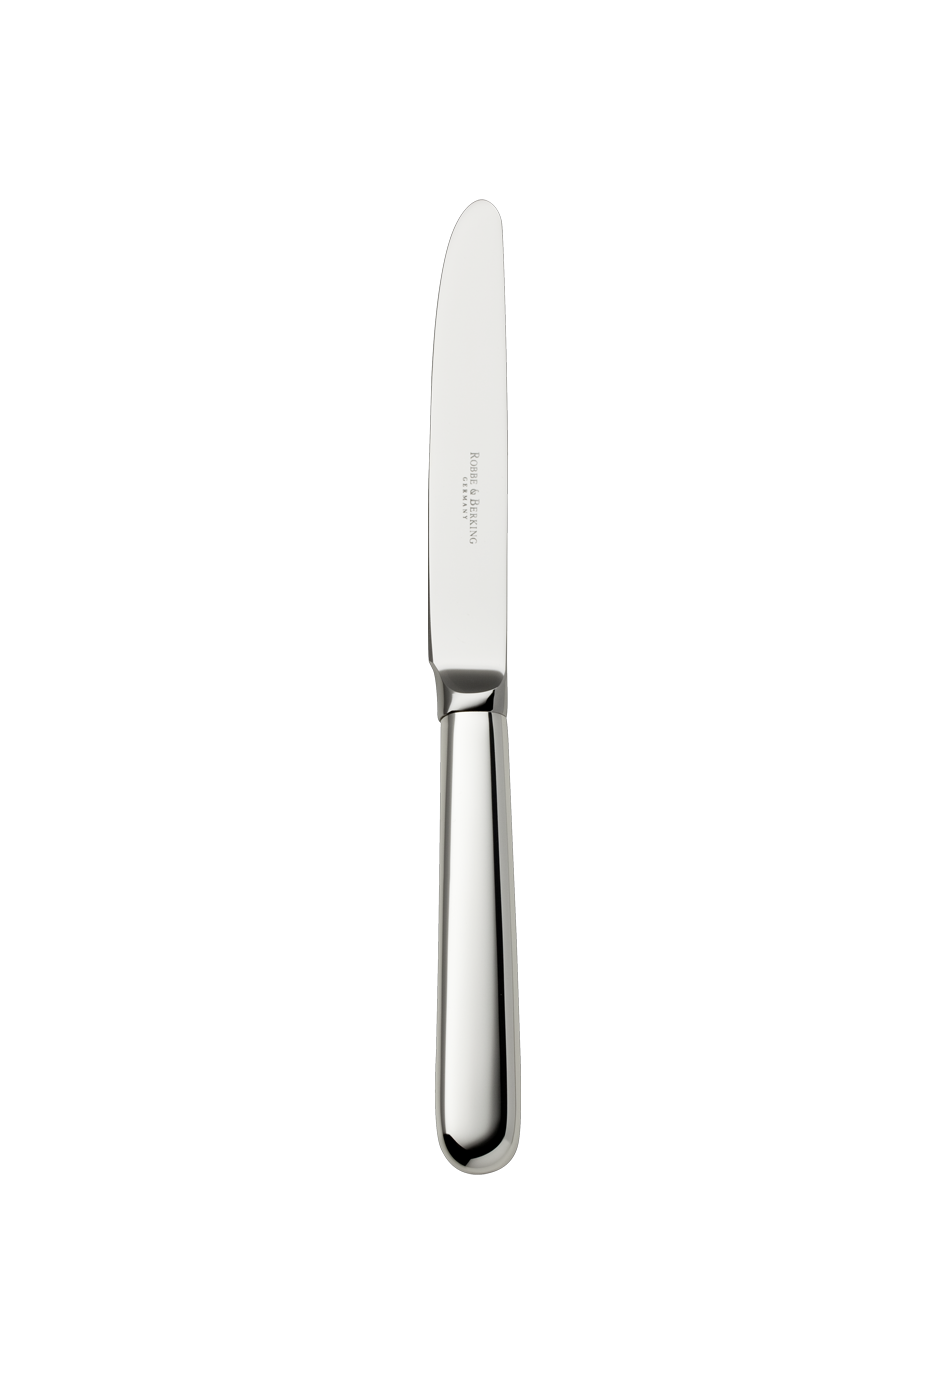 Dante Dessert Knife (150g massive silverplated)